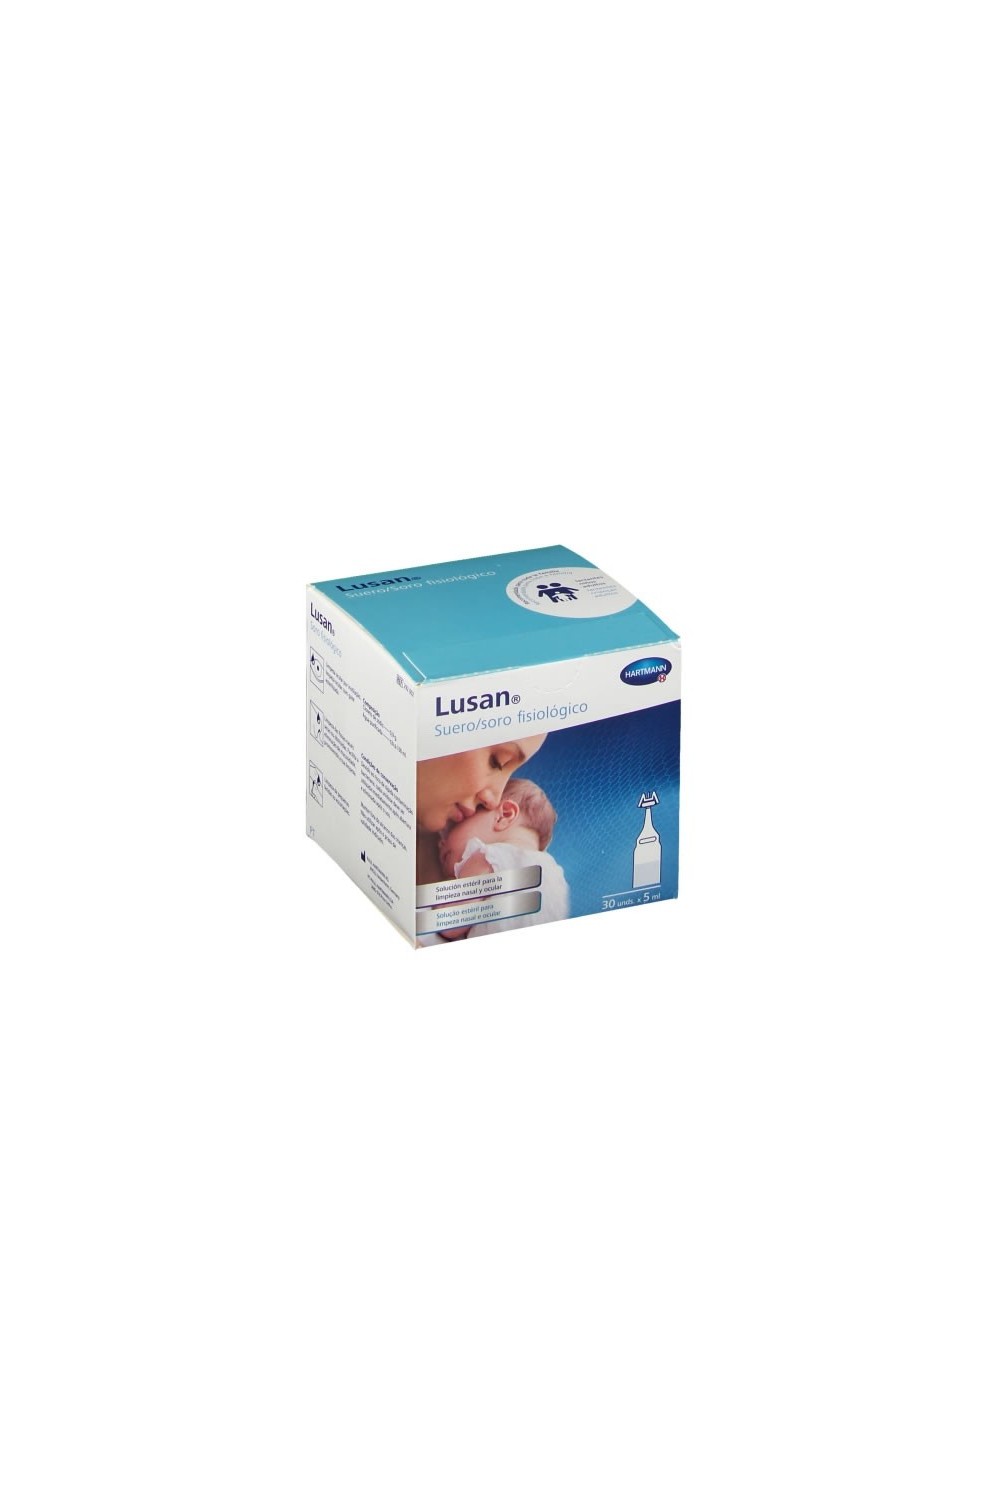 HARTMANN - Lusan Physiological Serum 30x5 ml Single dose